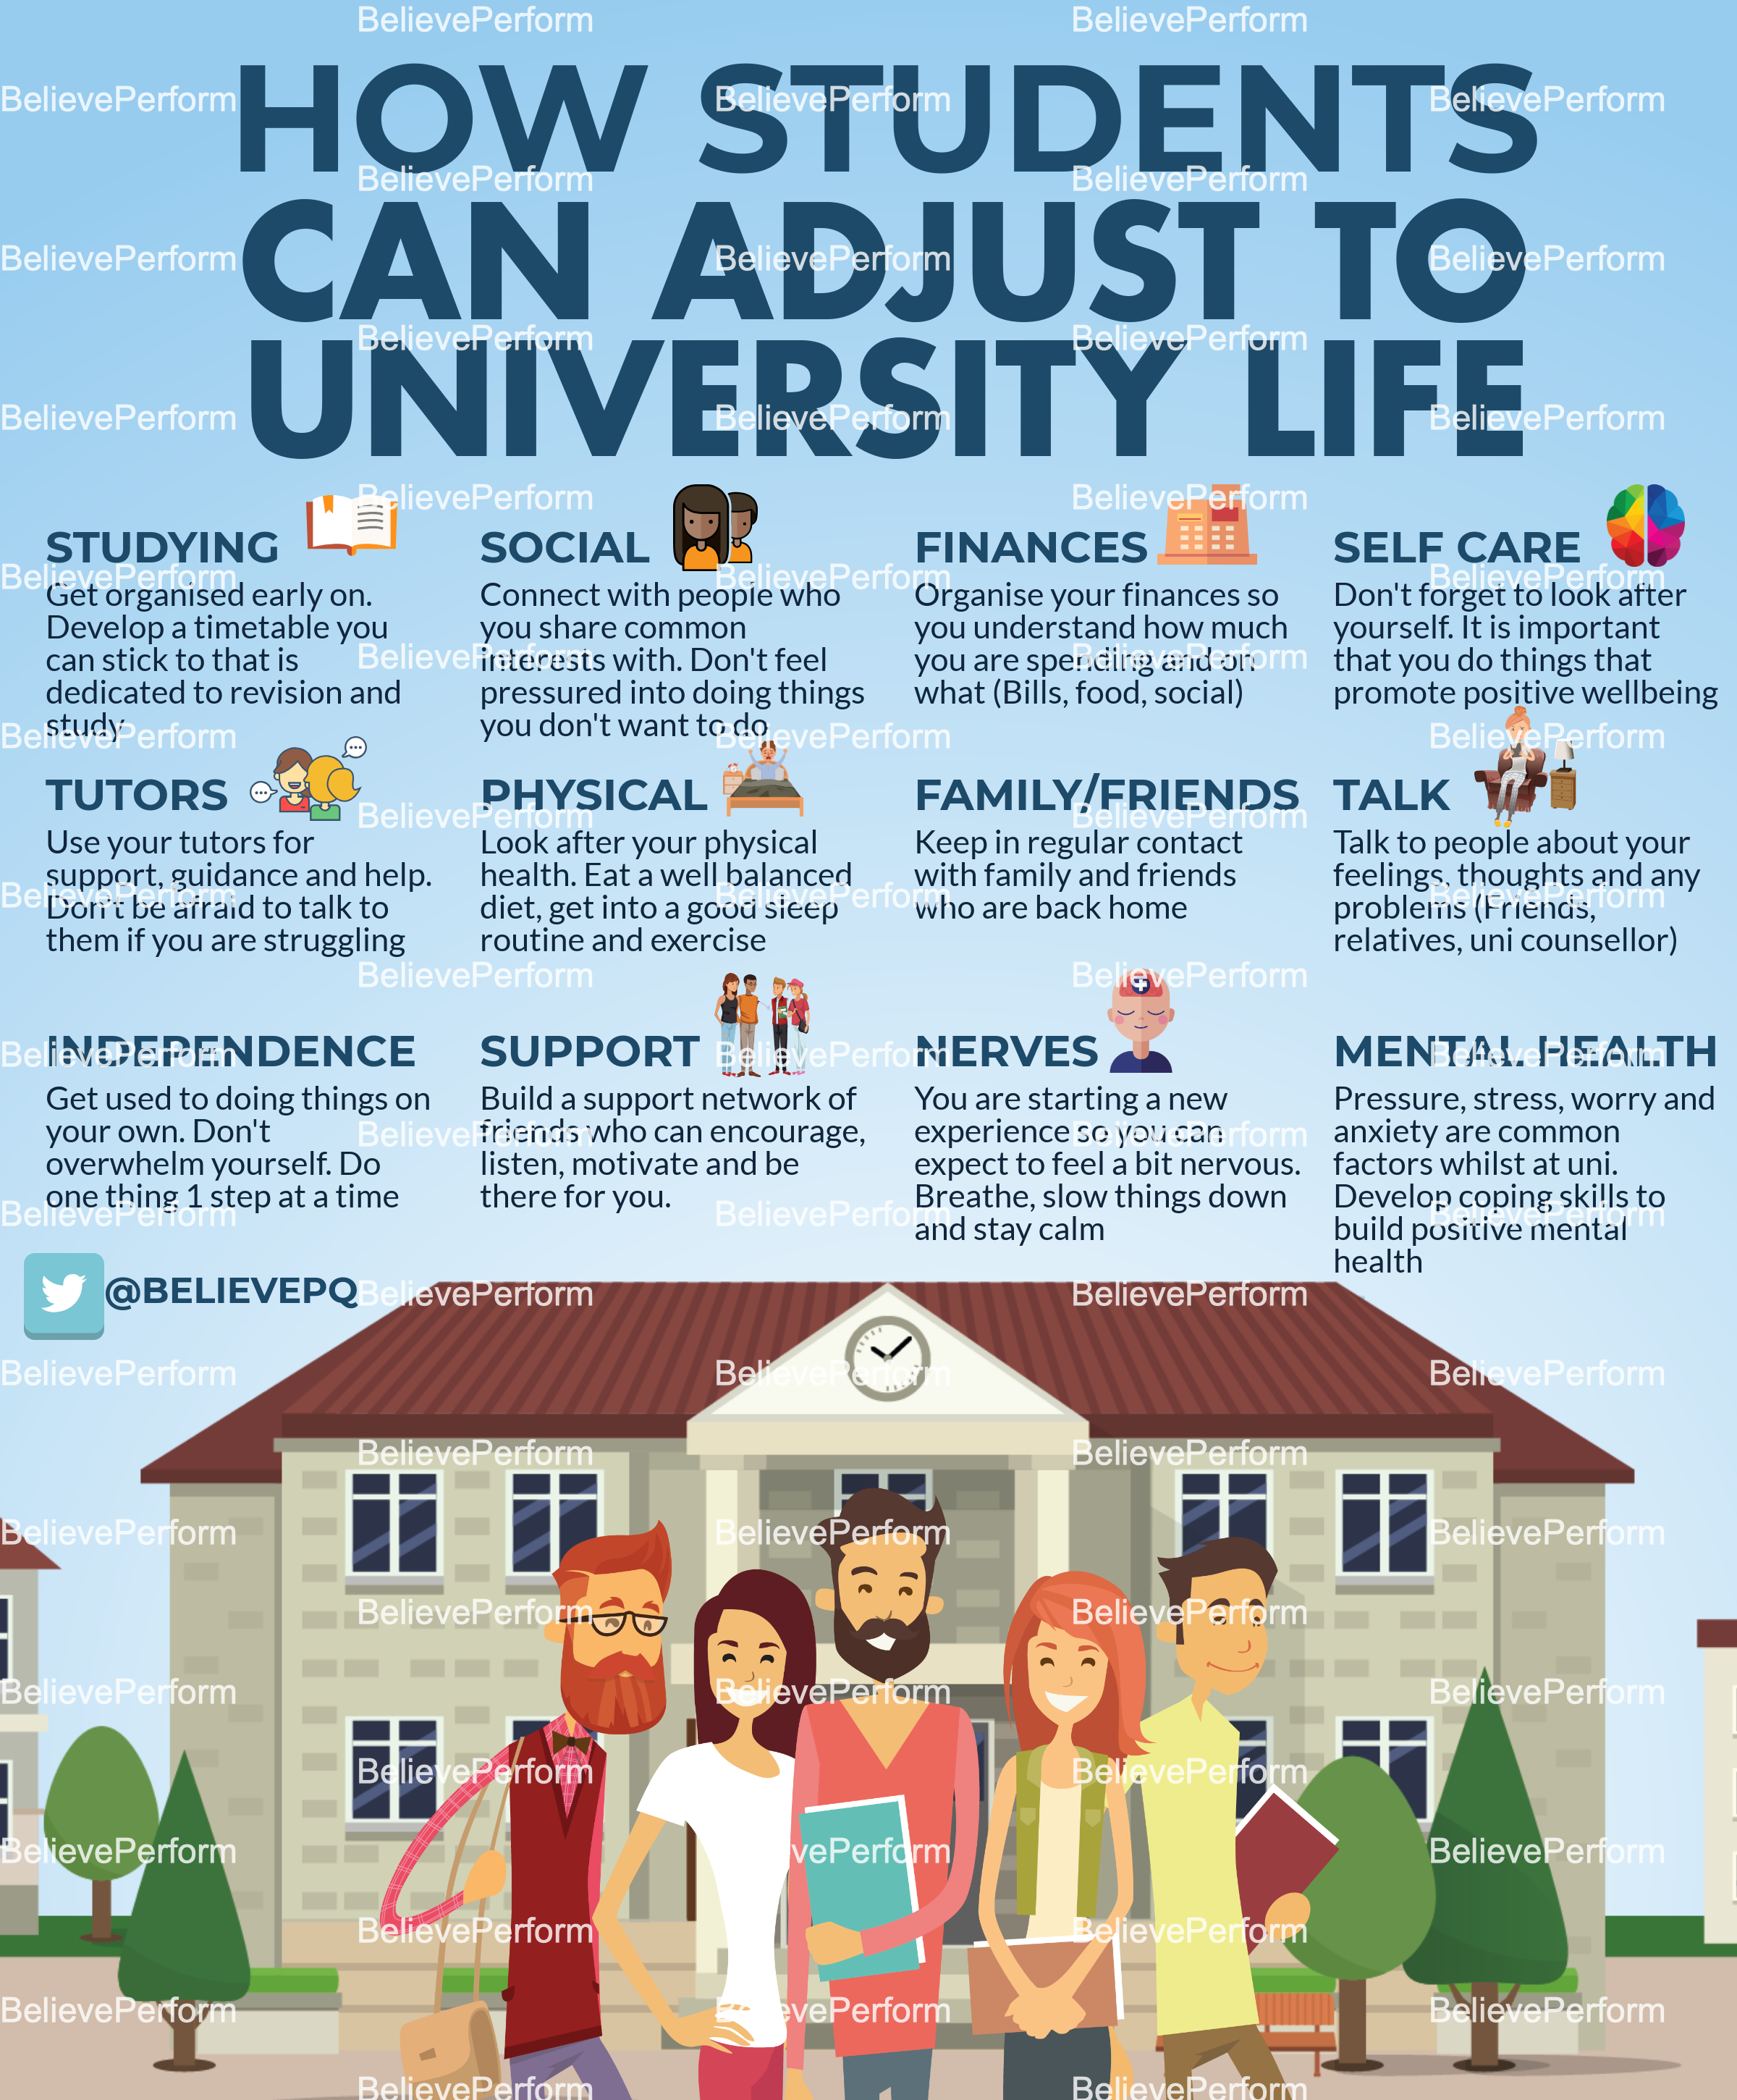 About University Life